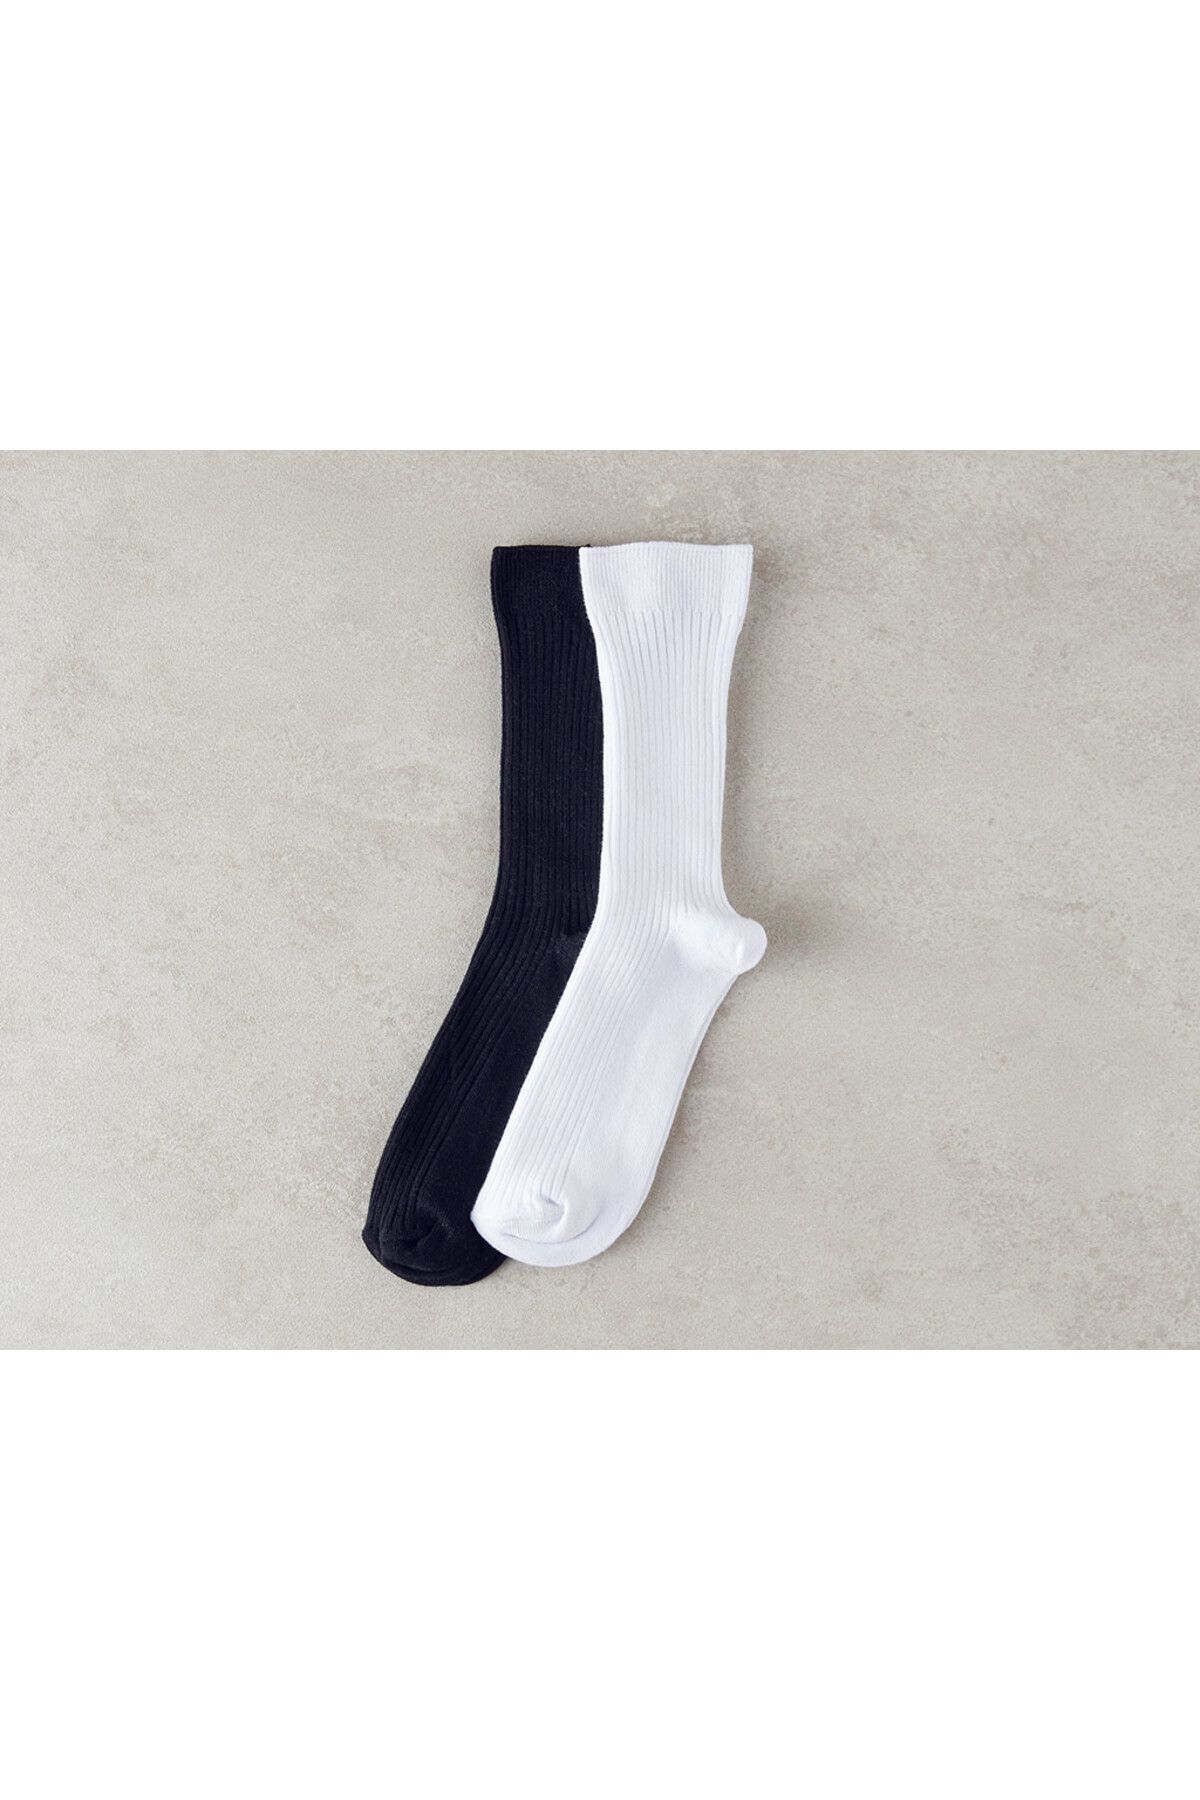 English Home Meri Kadın 2'li Soket Çorap Siyah - Beyaz